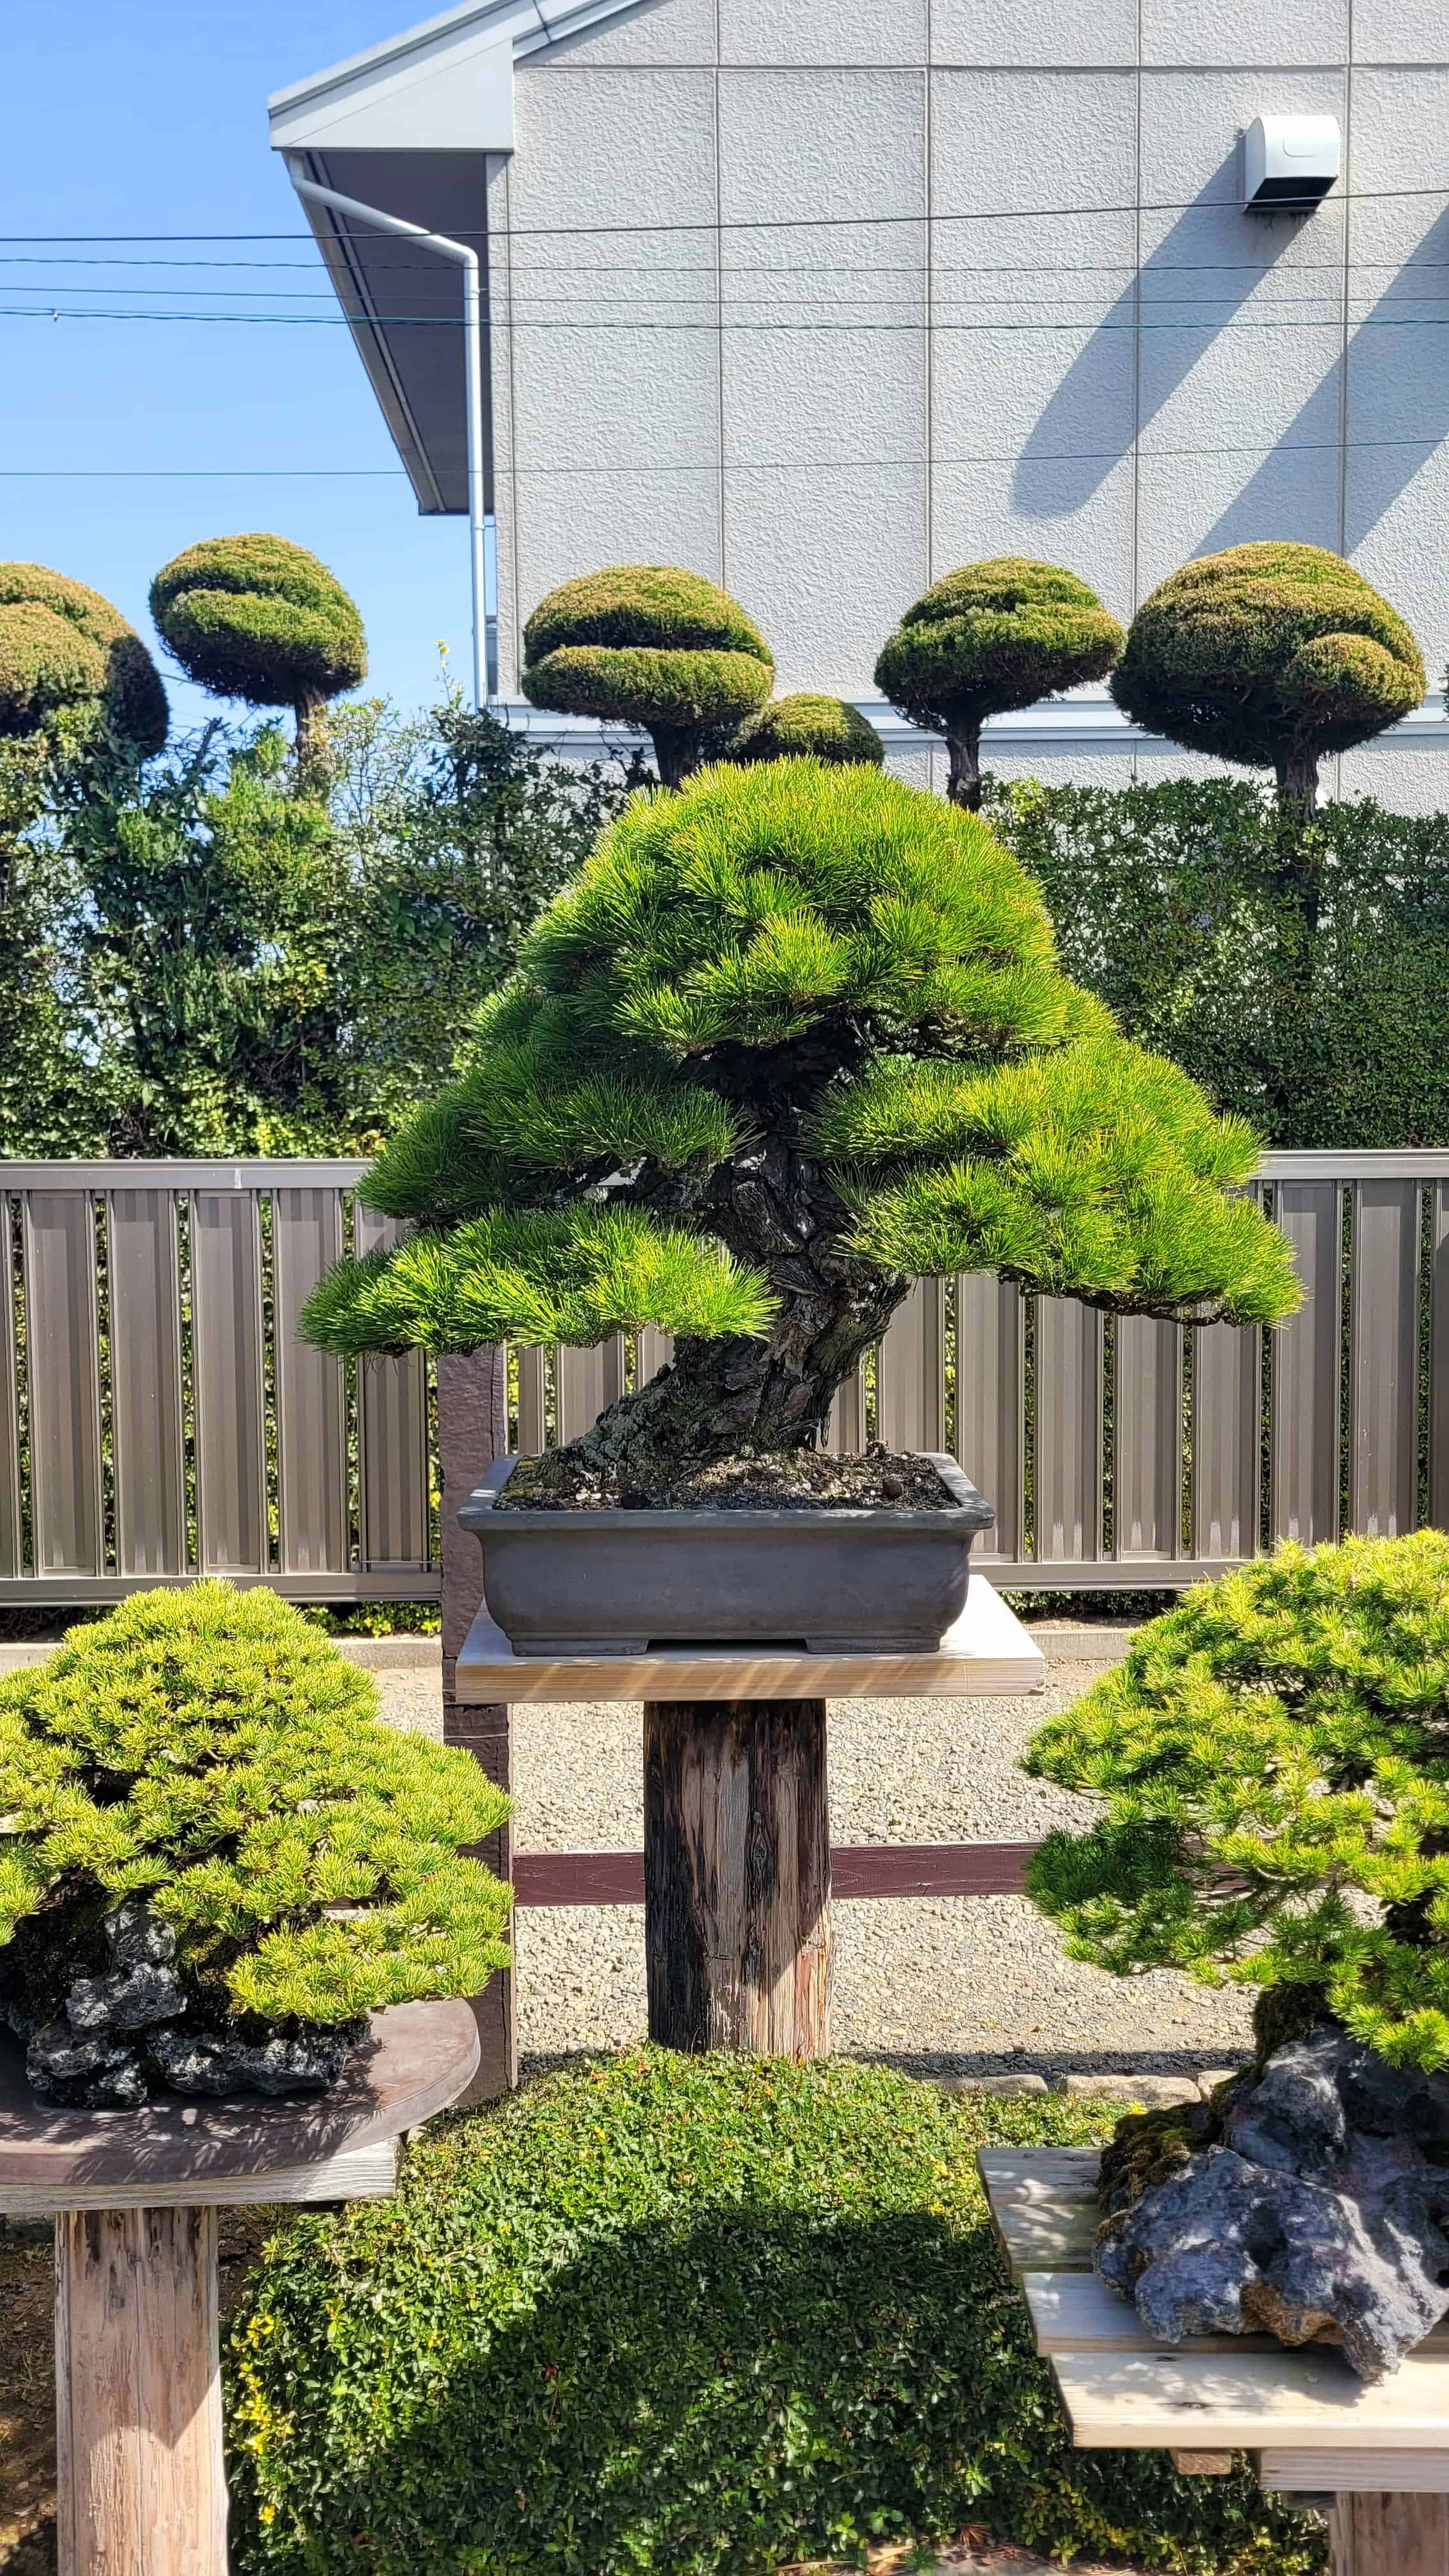 A pine bonsai tree from kimura in Japan